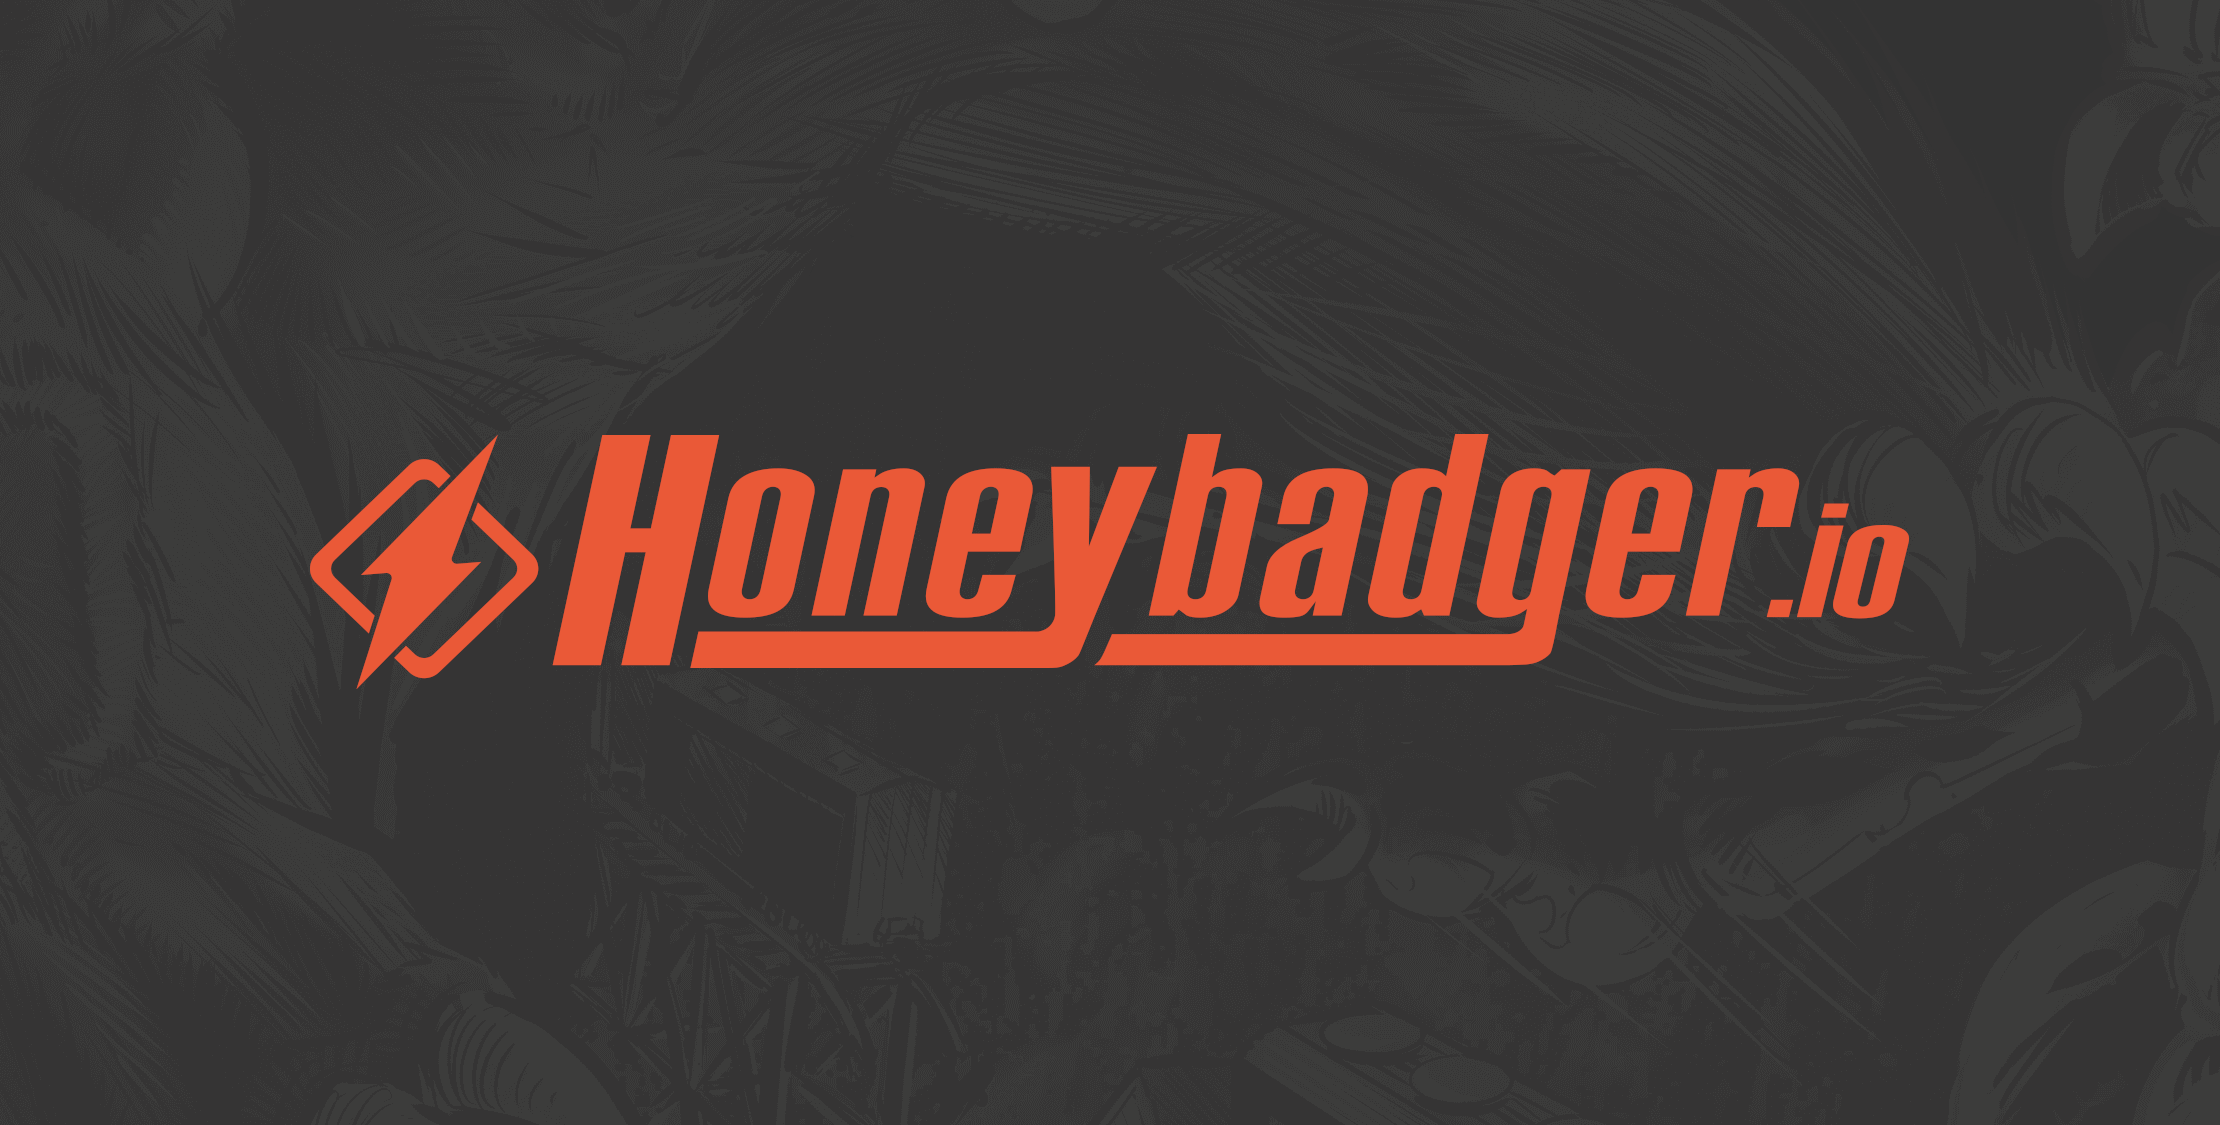 Honeybadger image